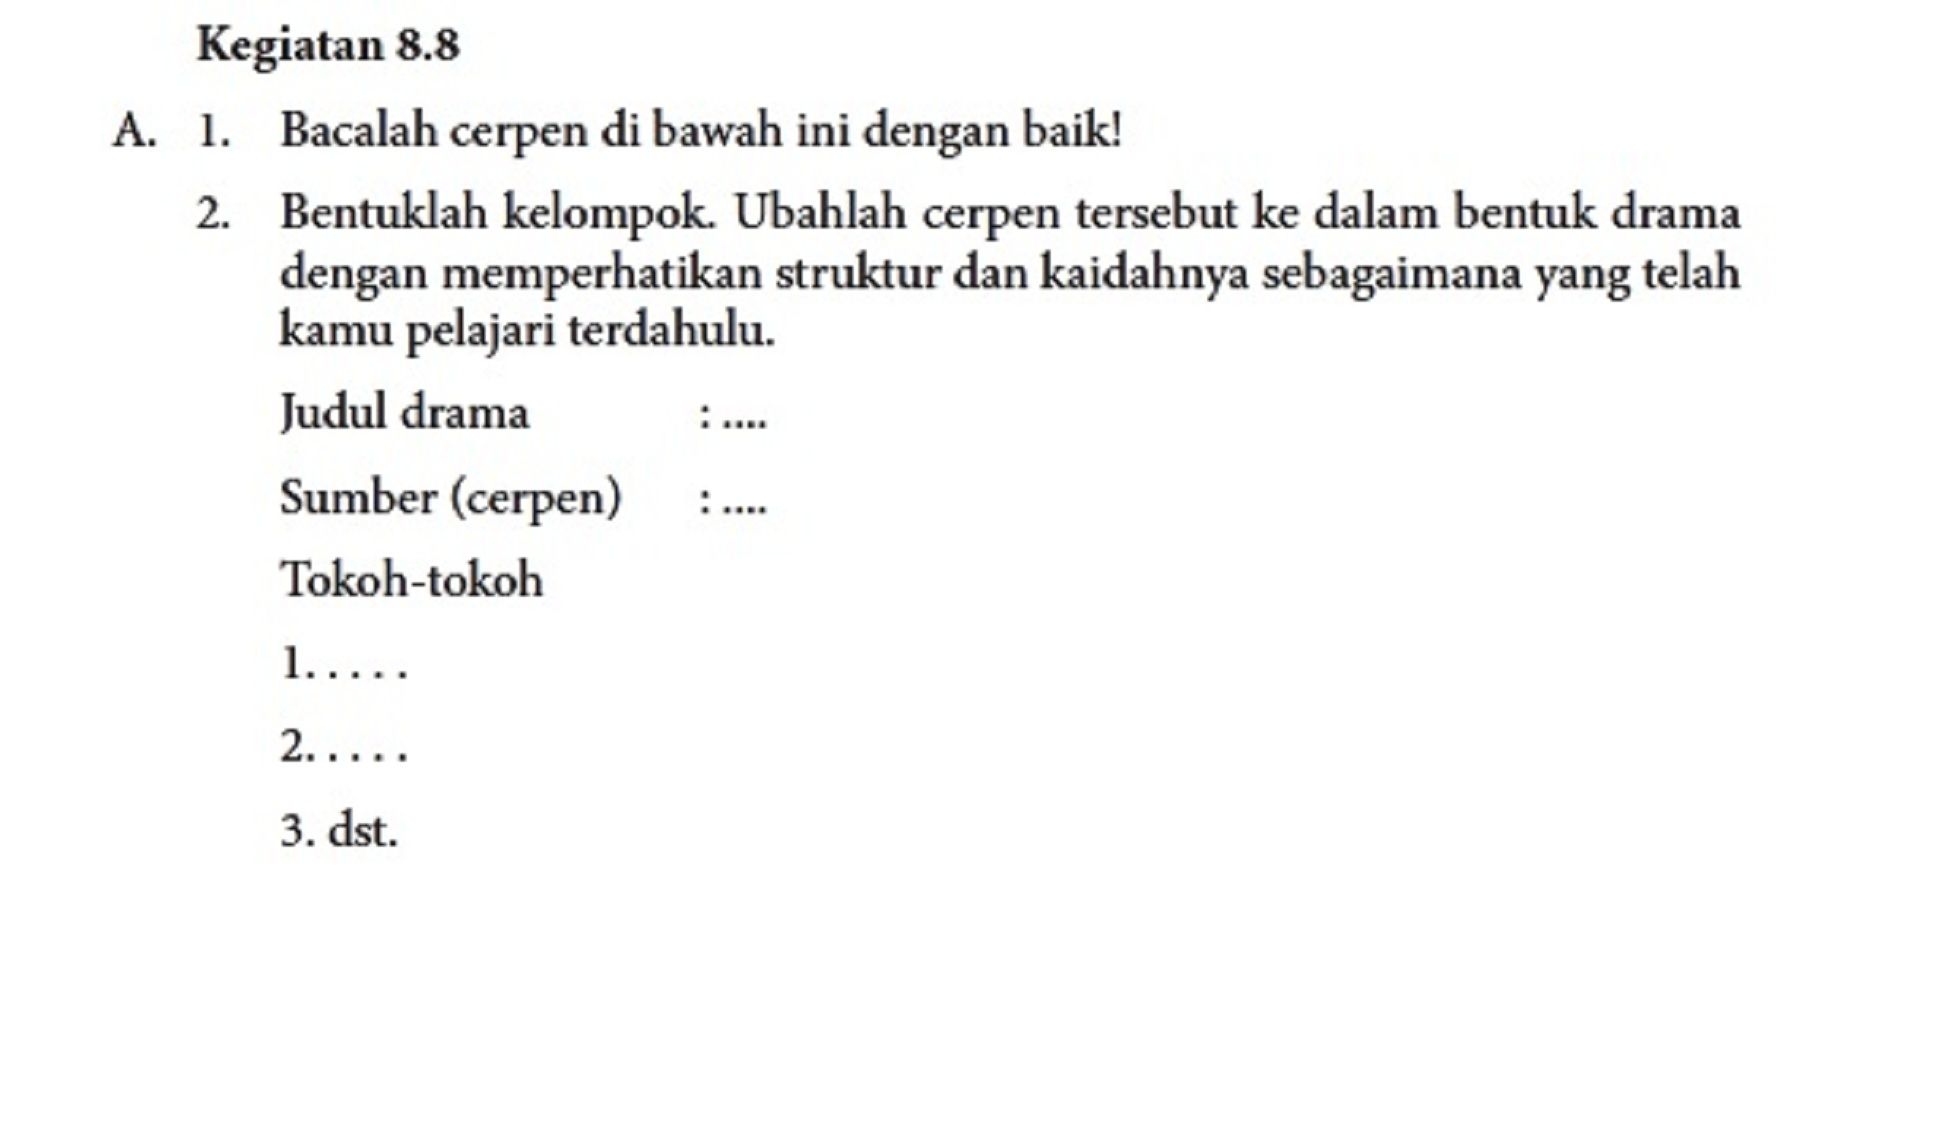 Soal Bahasa Indonesia Kelas 8 Halaman 224, Struktur Cerpen Kena Batunya dan Dialognya